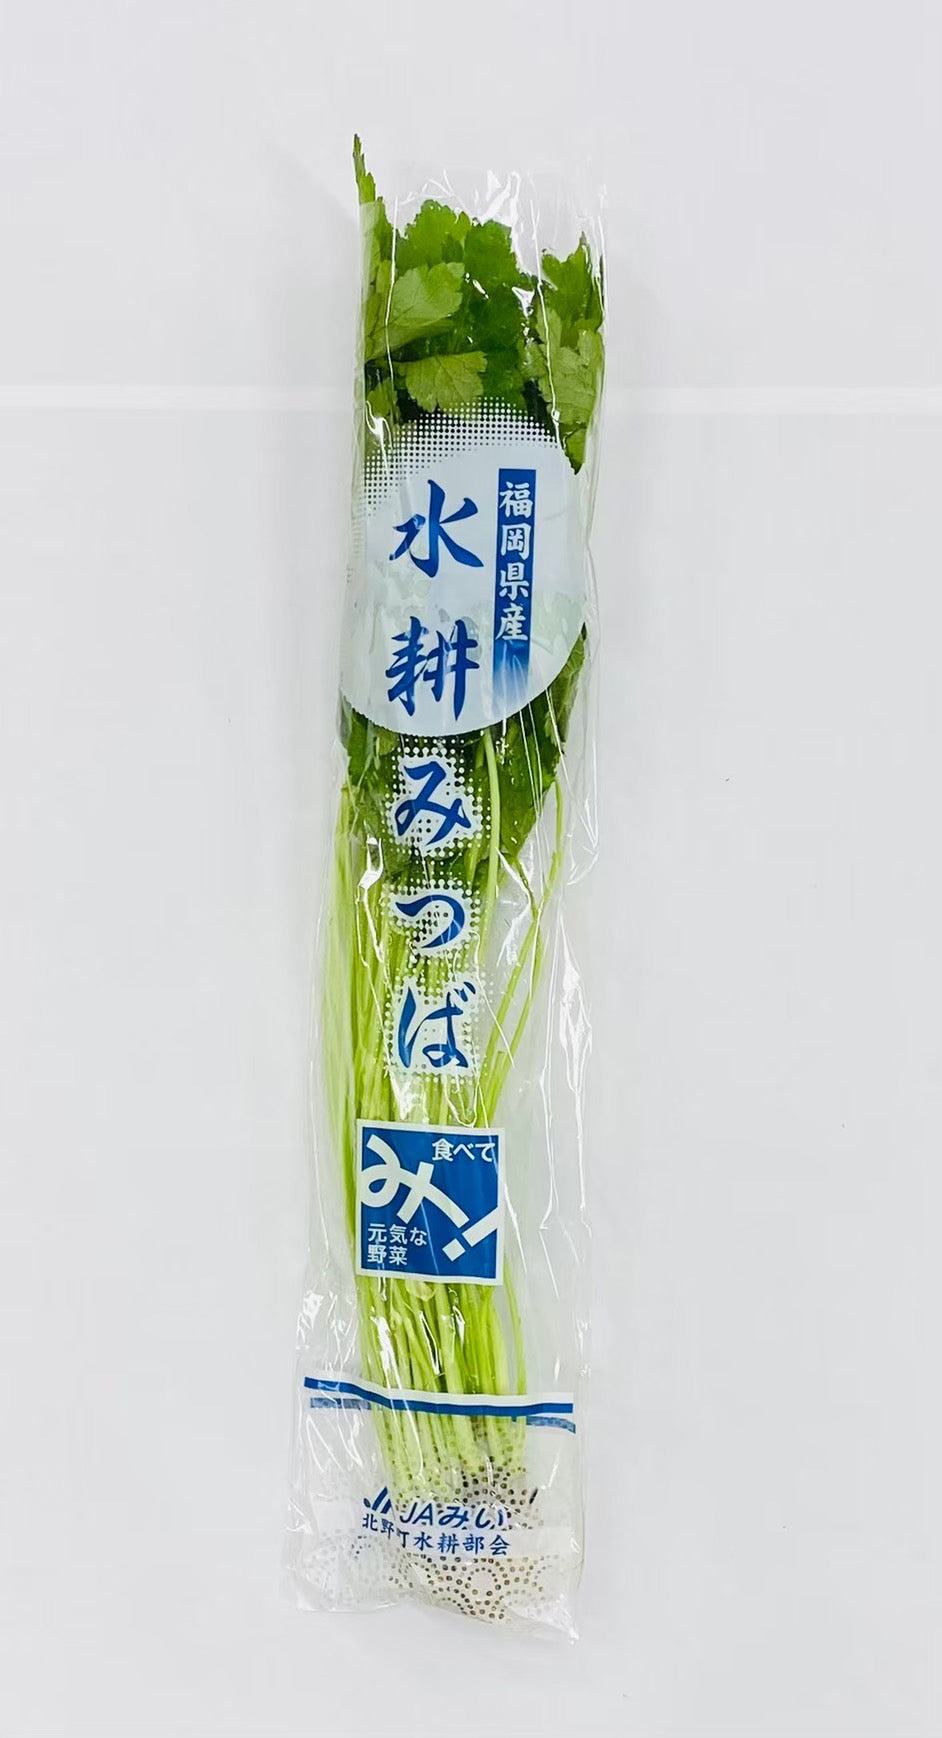 [Verduras de aniversario] Mitsuba (bolsa) 75 g x 20 bolsas (capacidad 1,5 kg)